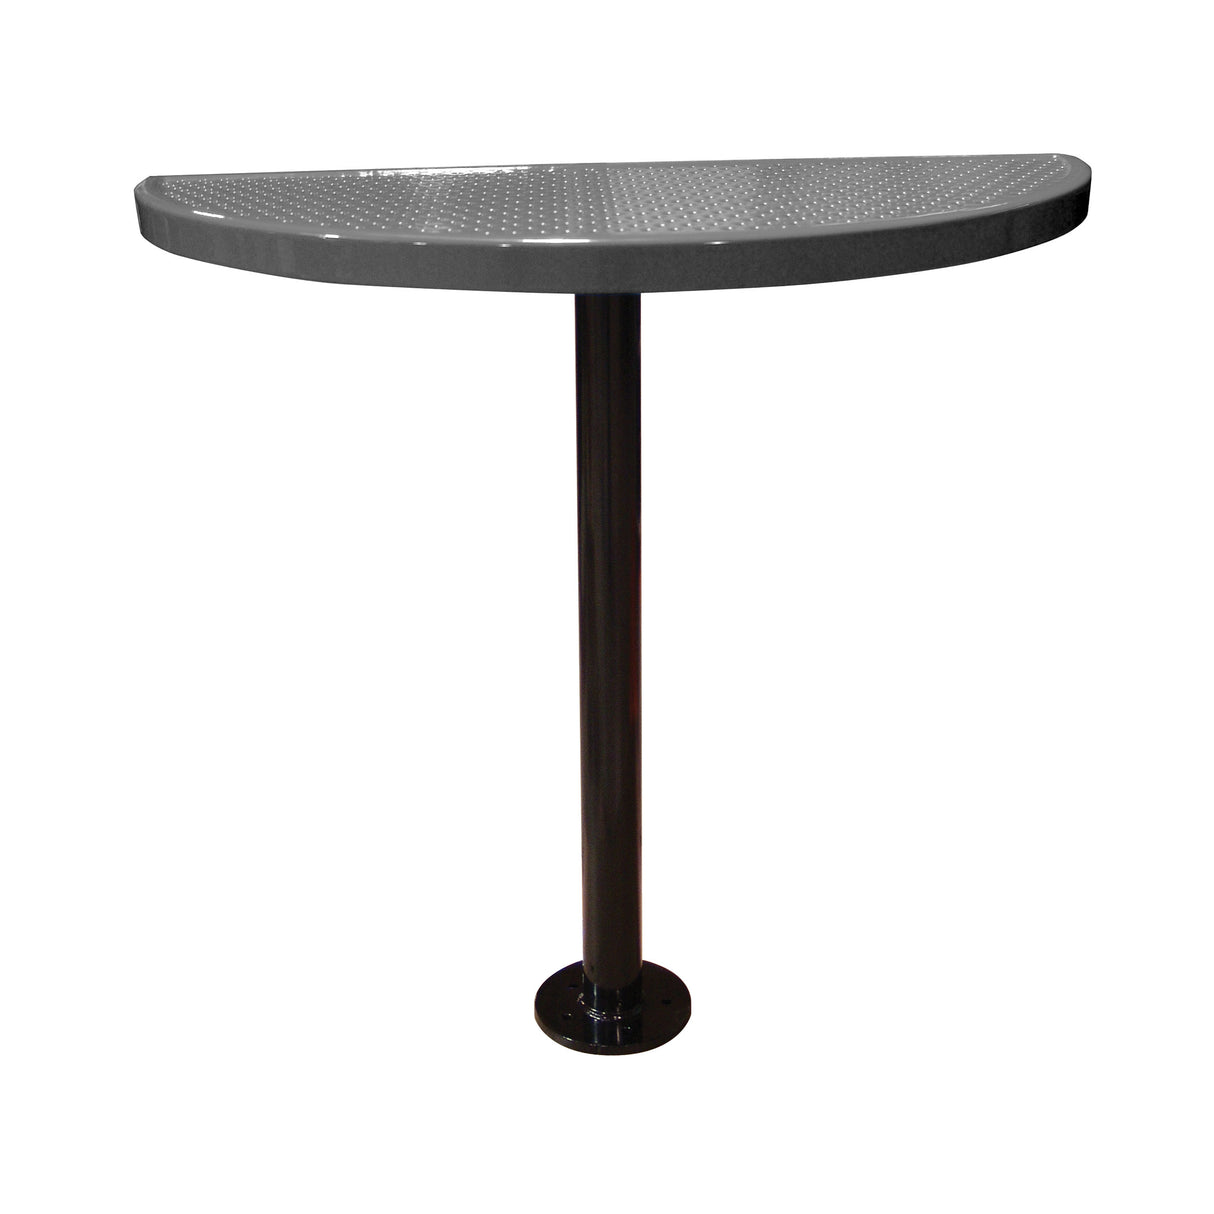 Perforated Semi-Circular Café Pedestal Table